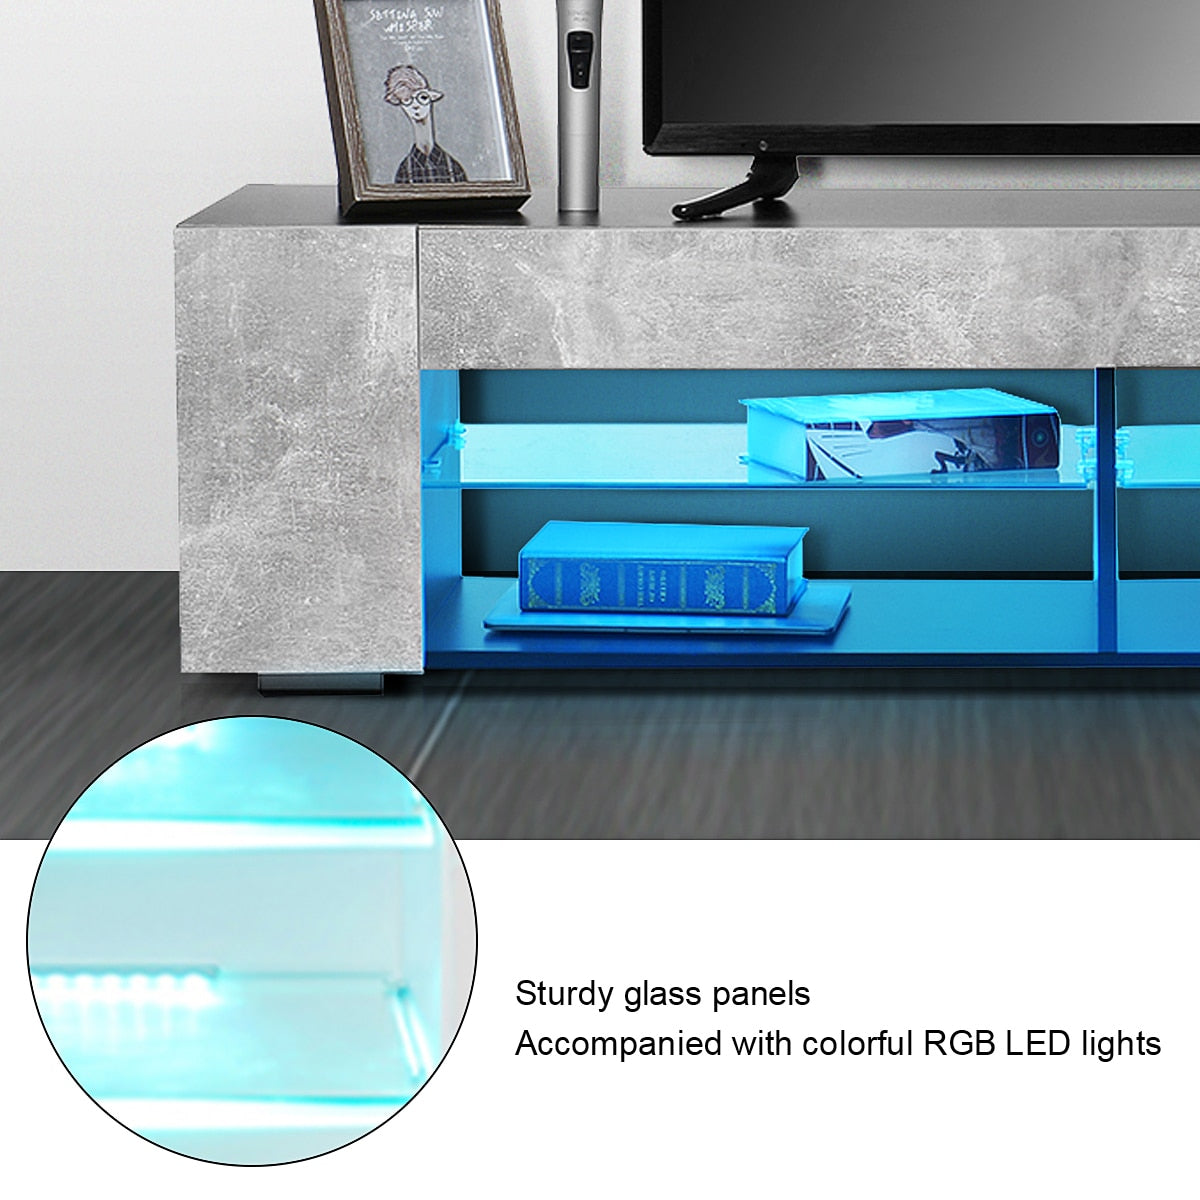 Modern TV LED Stand